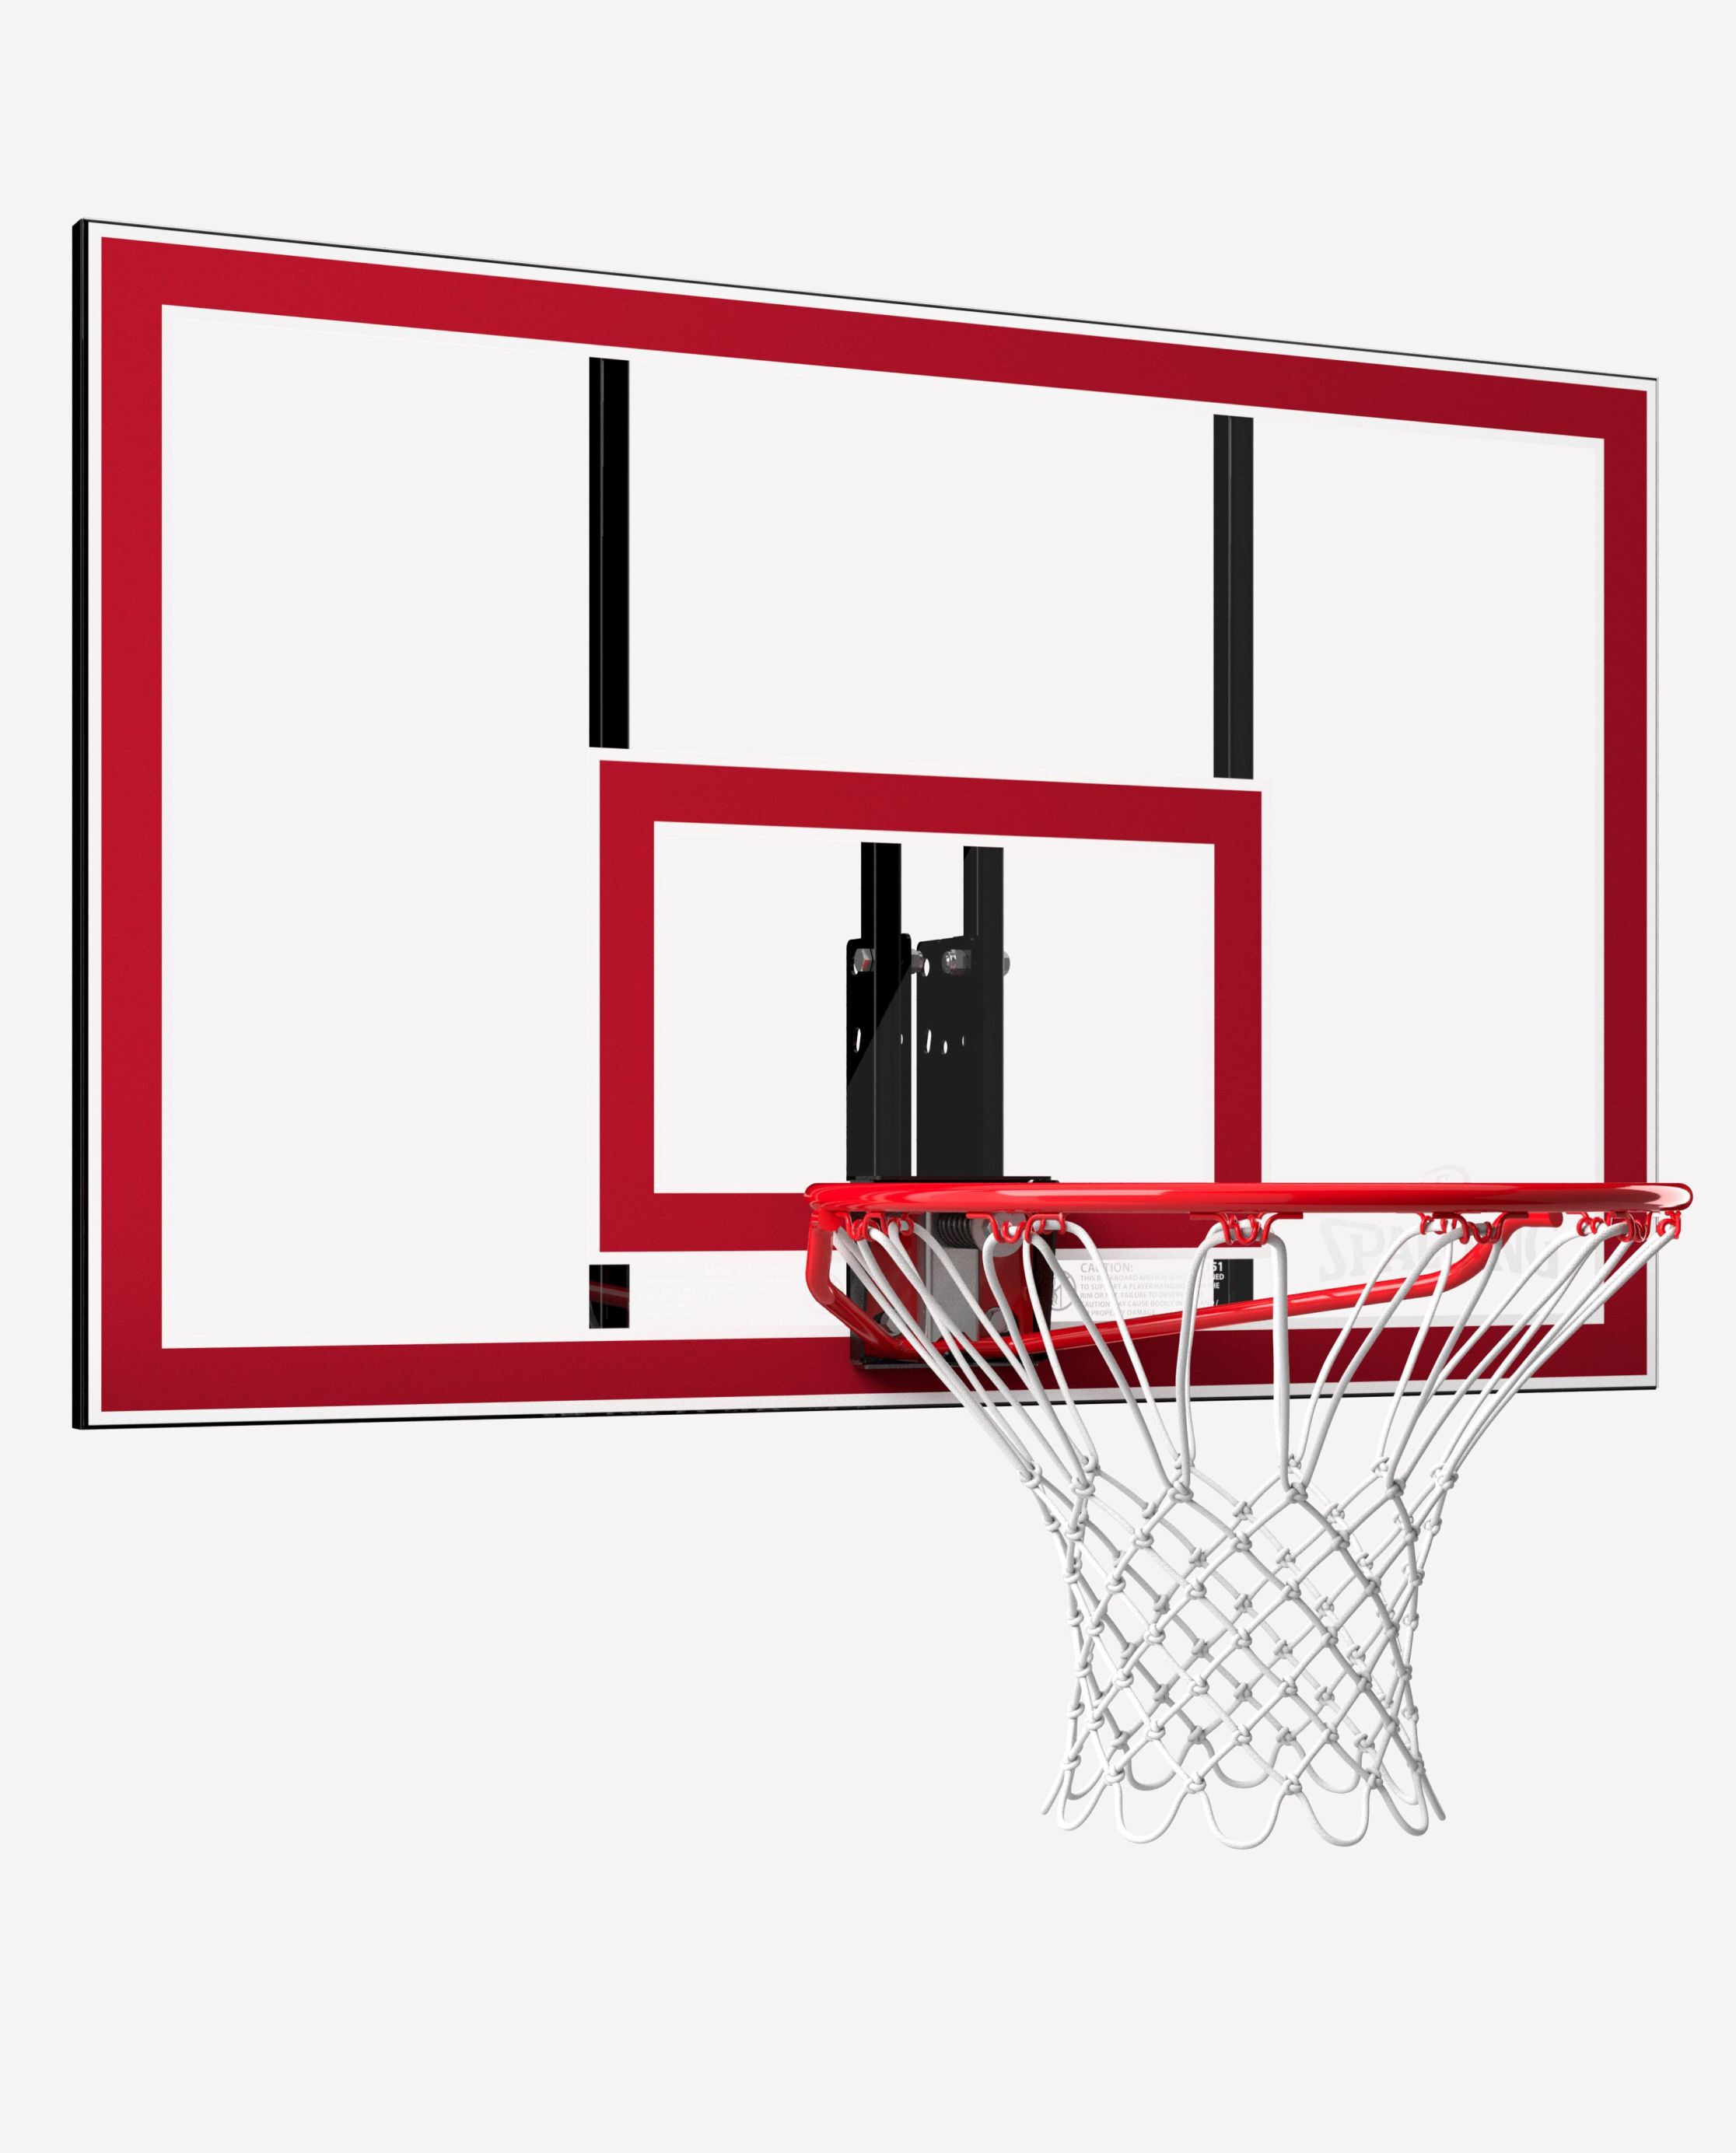 48 Inch Basketball Backboard Wall-Mount Hoops & Goals Rim Combo Kit&Shatterproof Polycarbonate Board&All-Steel Rustproof Frame&for Standard No.7 Balls 